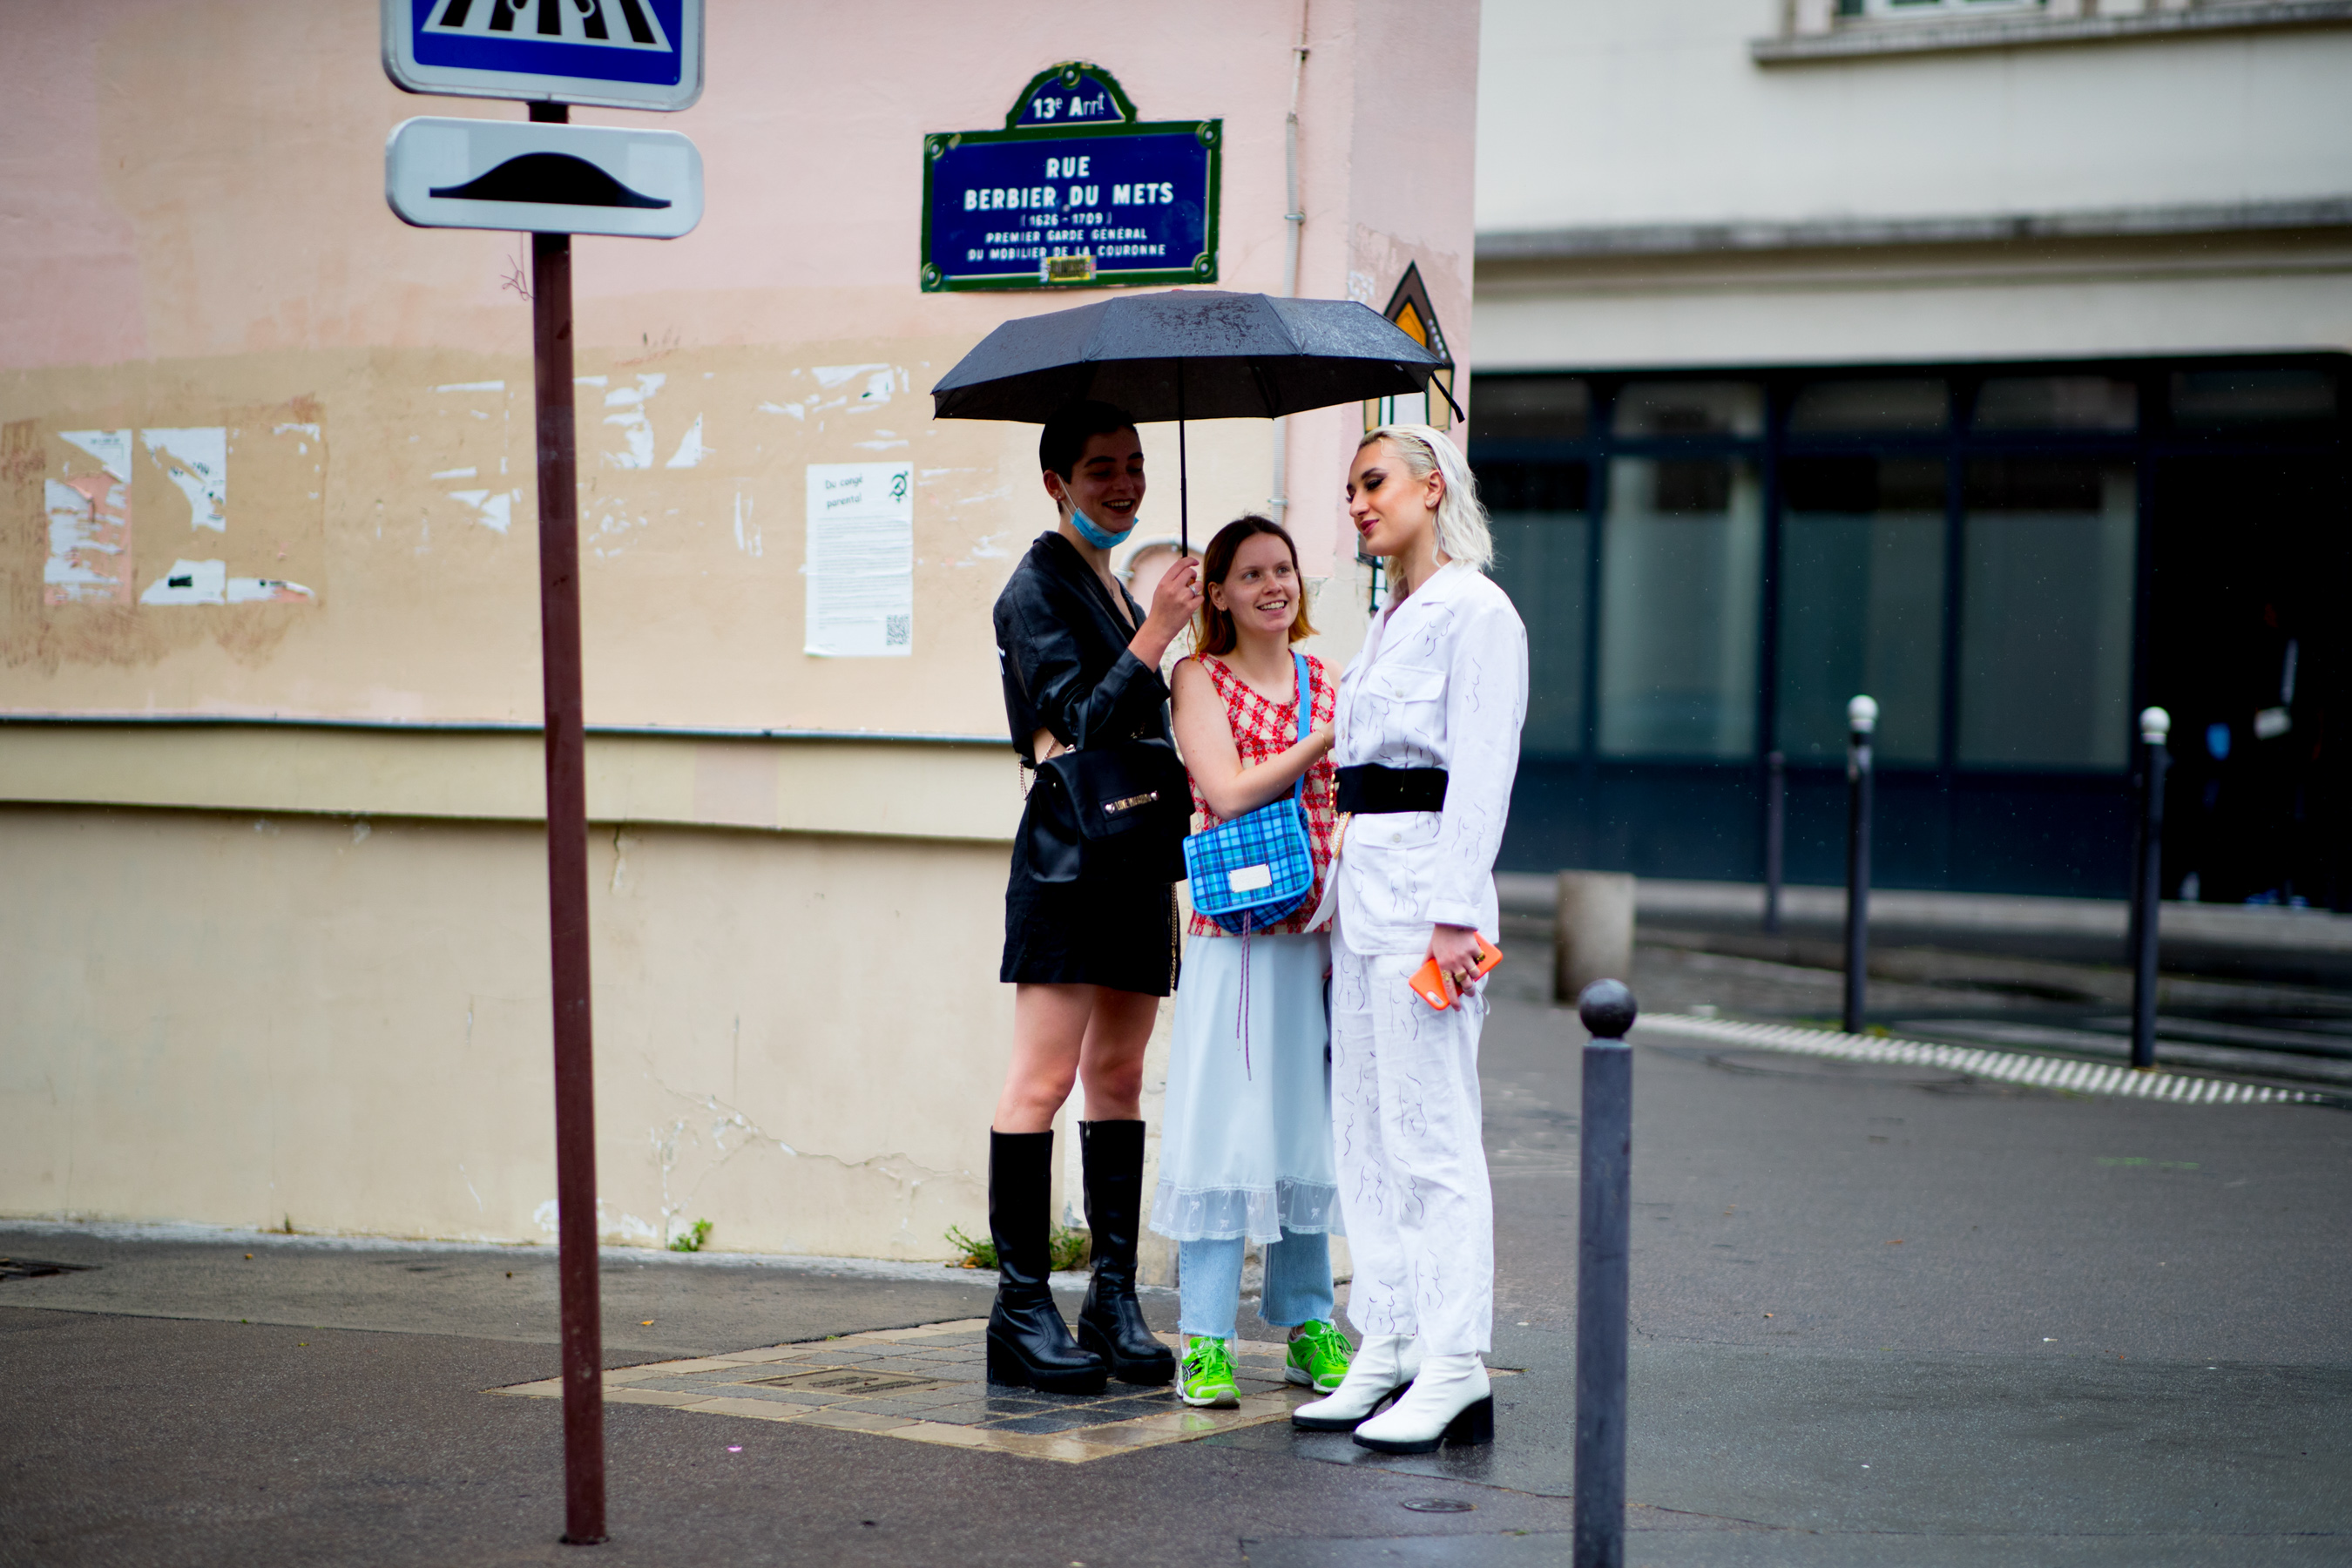 Paris Men's Street Style Spring 2022 Day 5